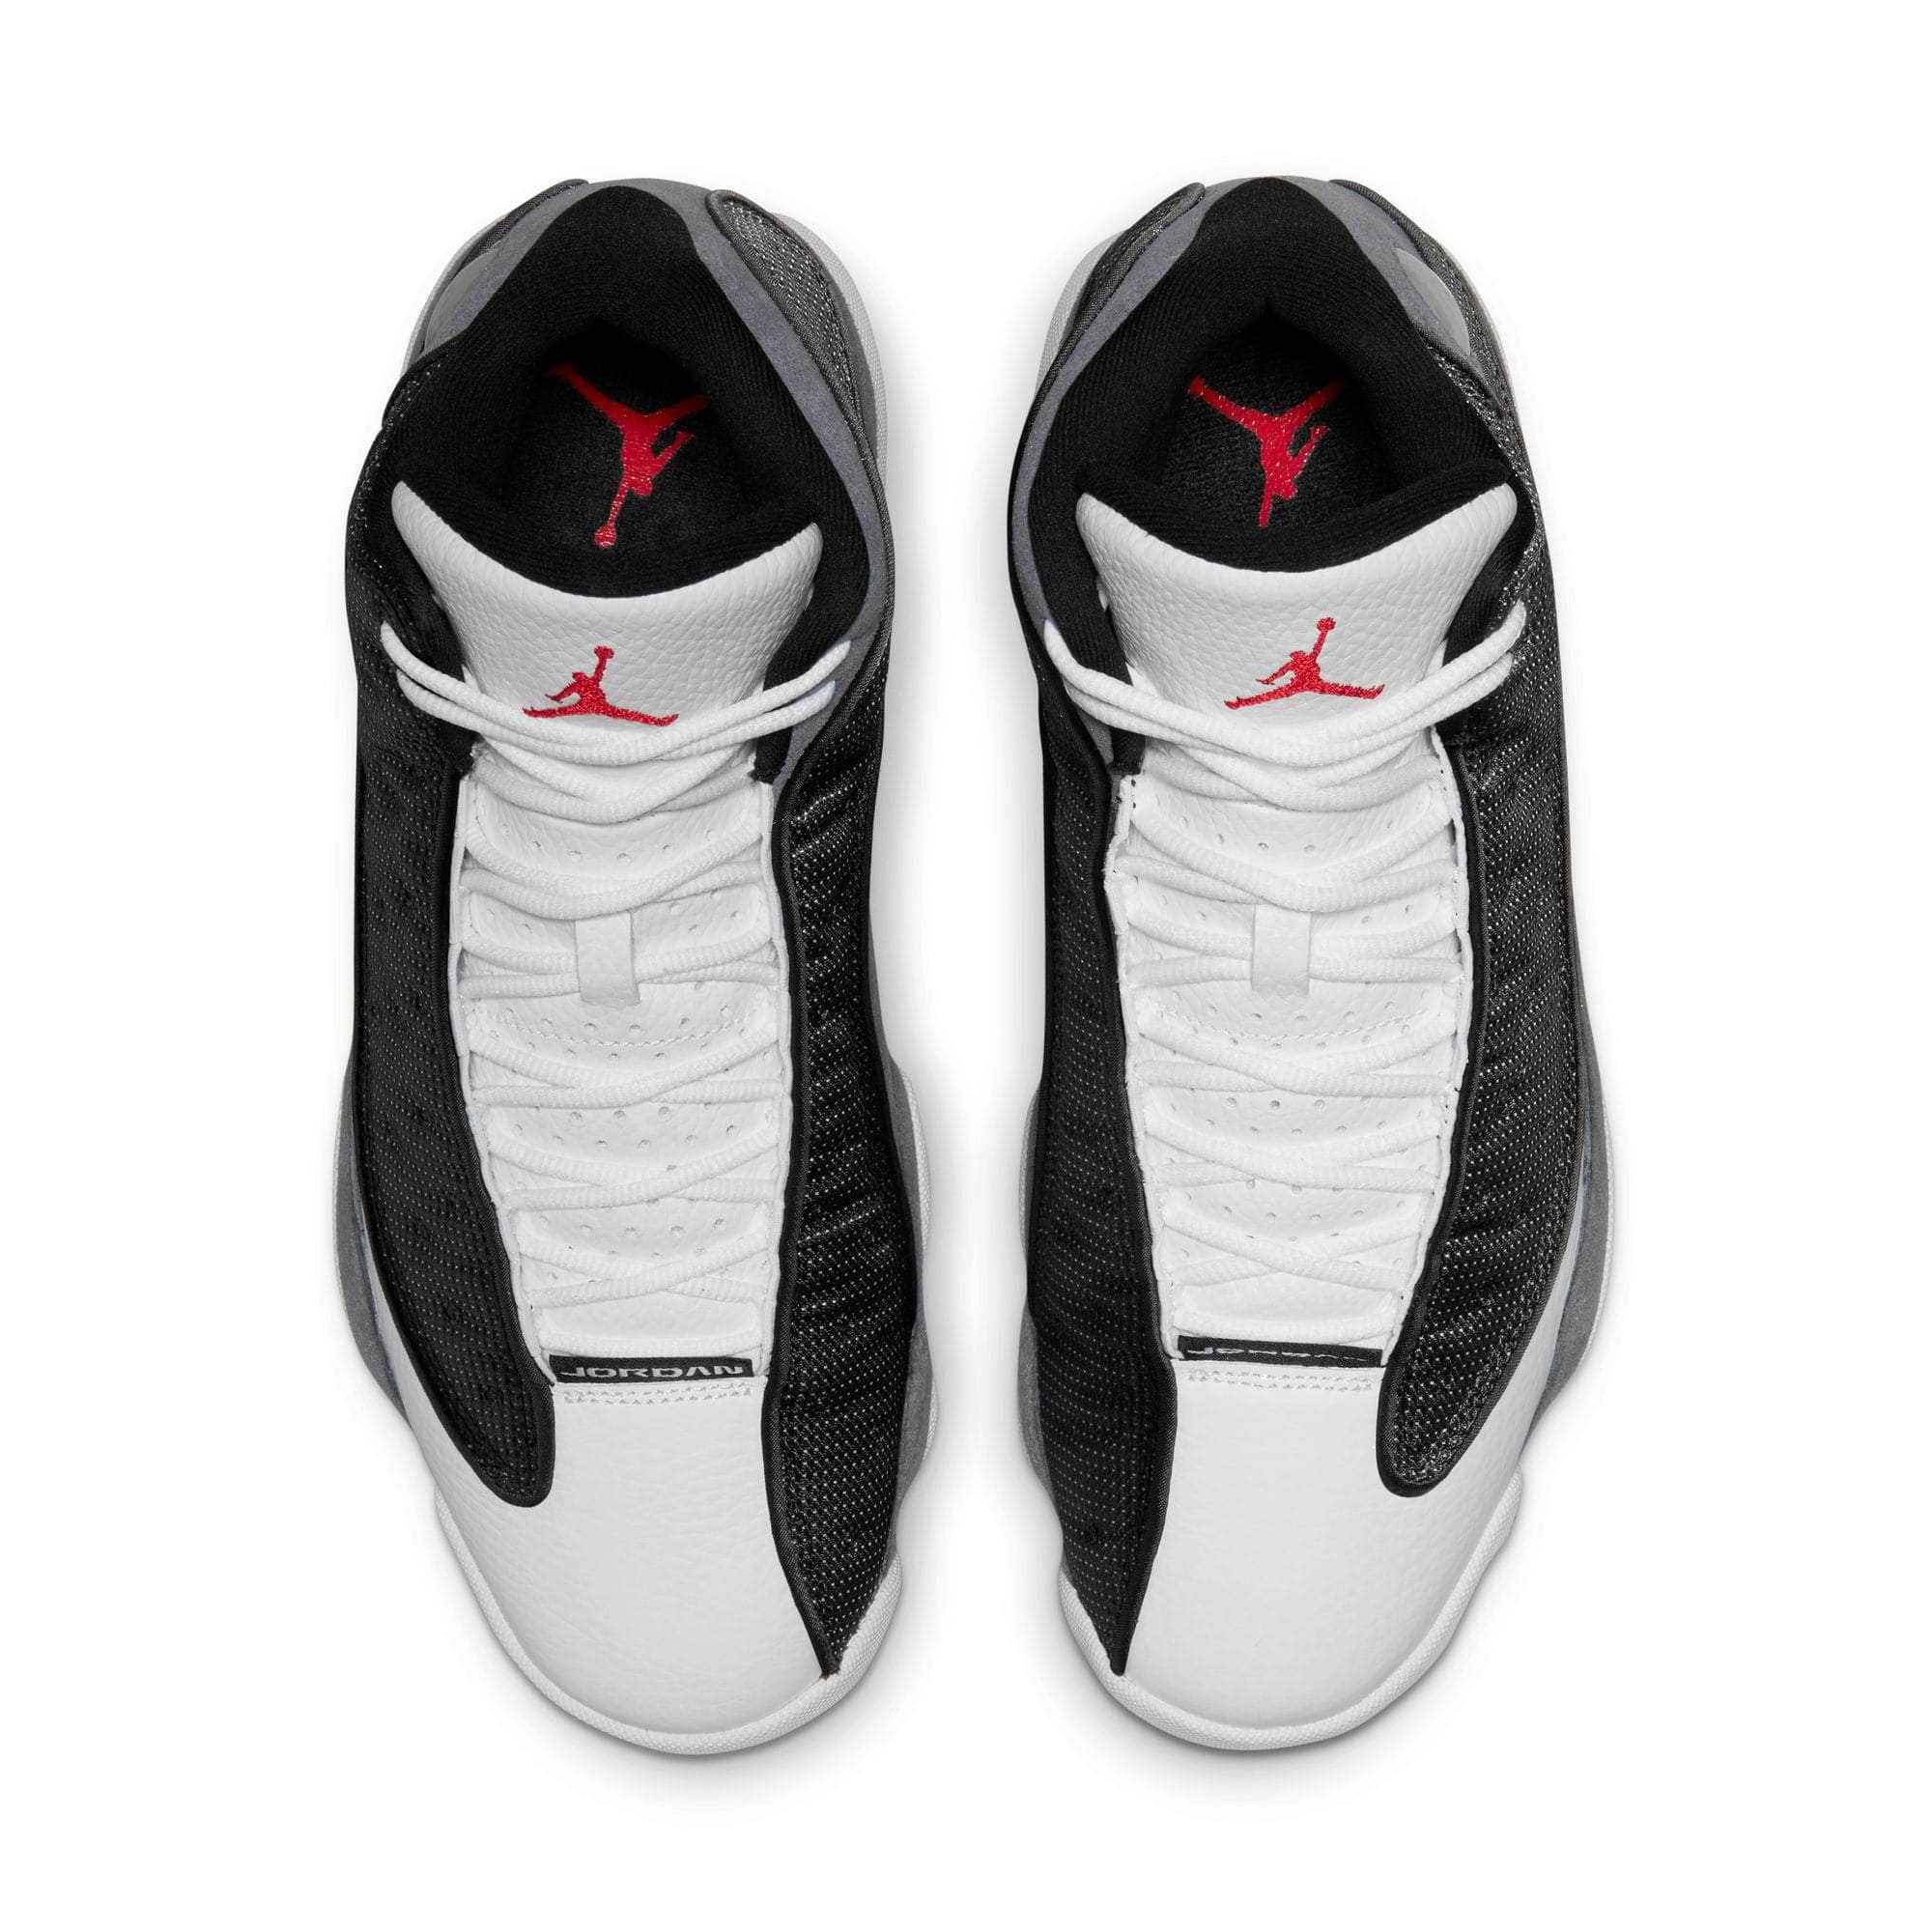 Available Now] Buy New Air Jordan 13 Black White